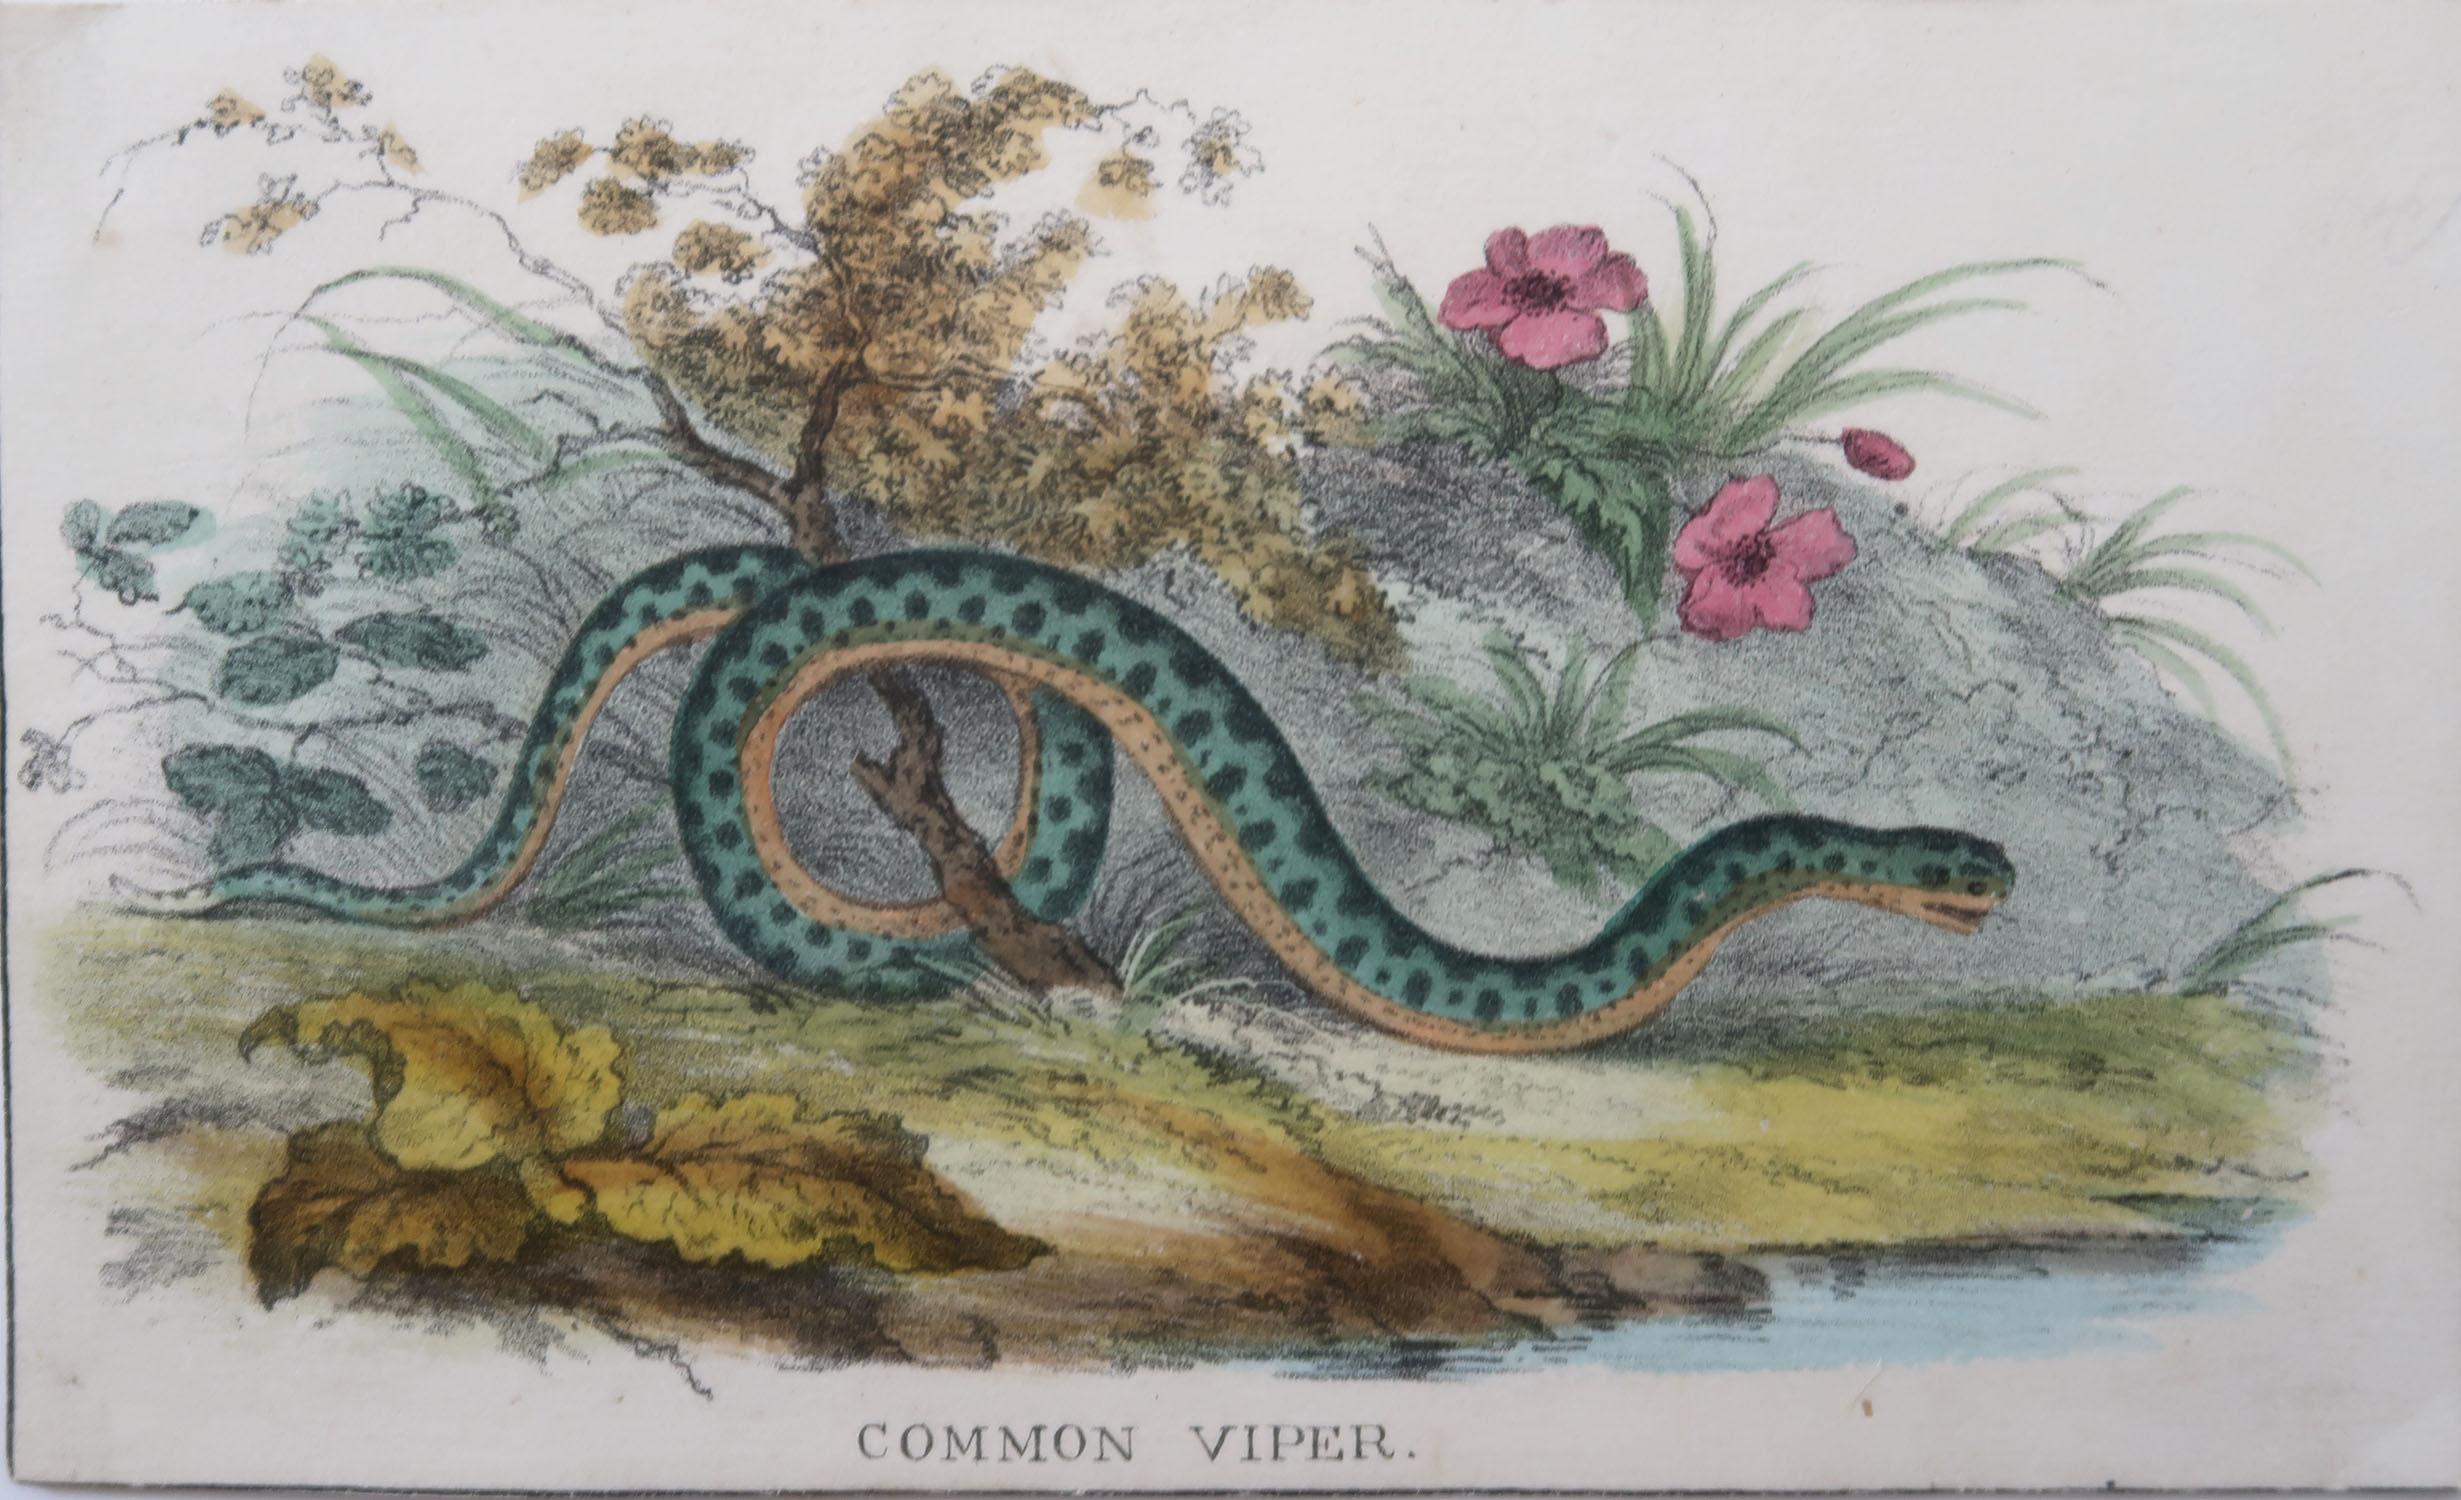 Other Set of 4 Original Antique Prints of Snakes, circa 1860